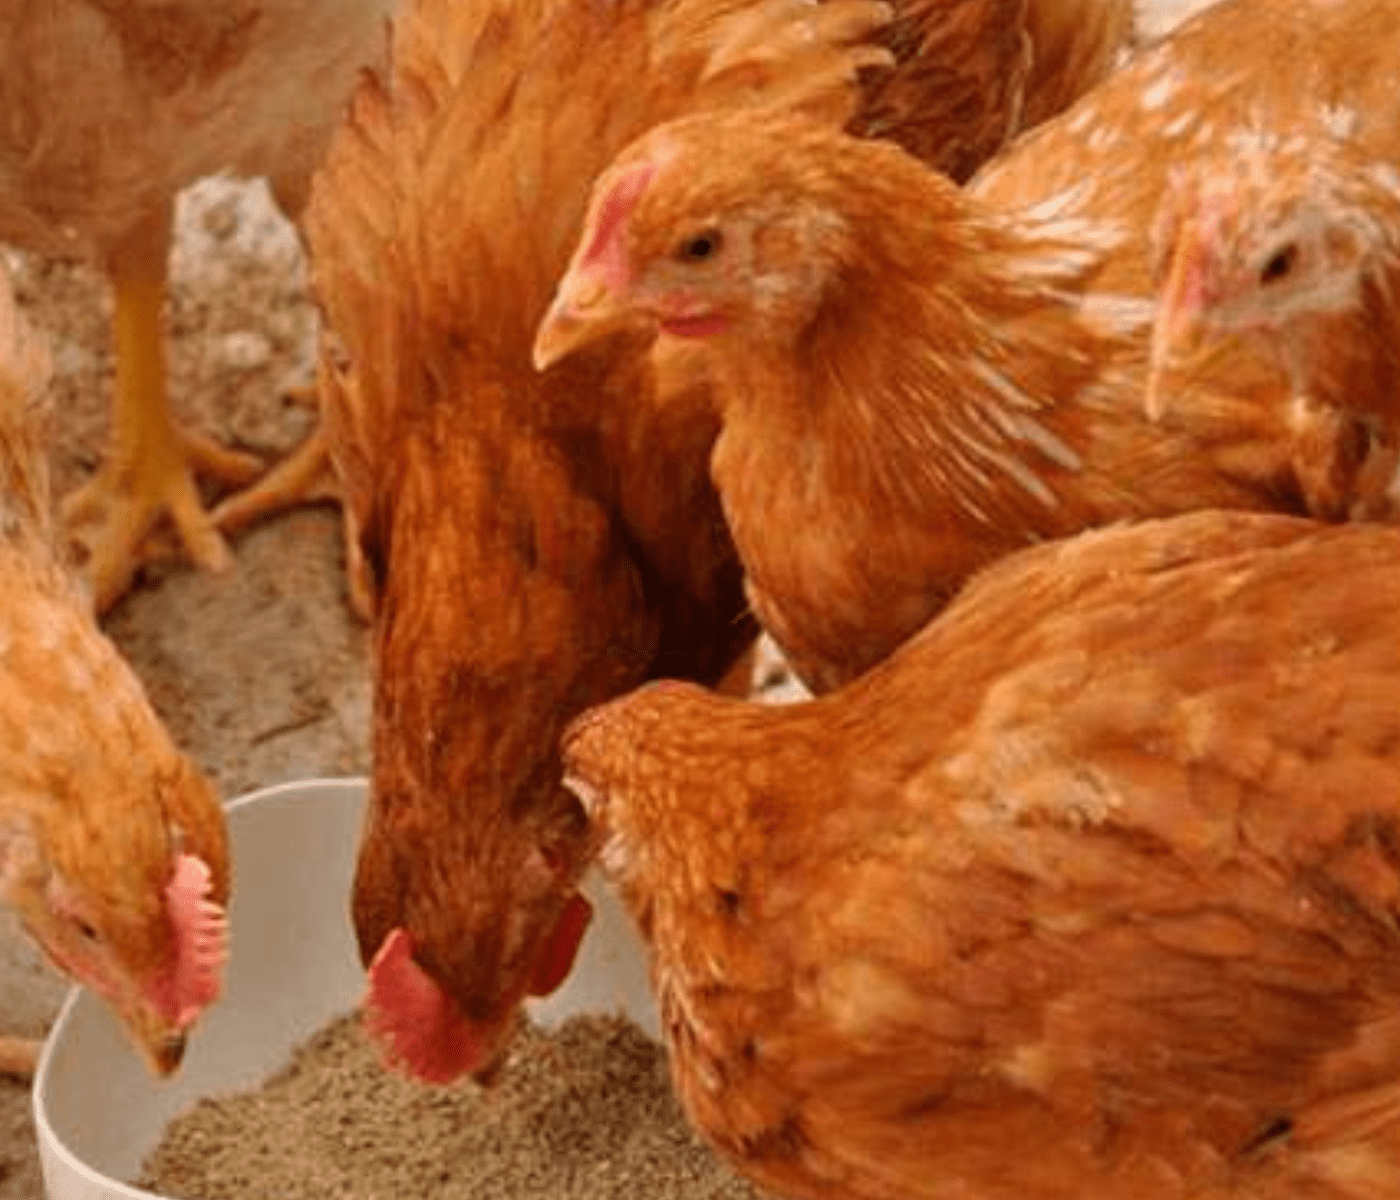 Paraguay reporta casos de Influenza Aviar de Alta Patogenicidad en aves de traspatio